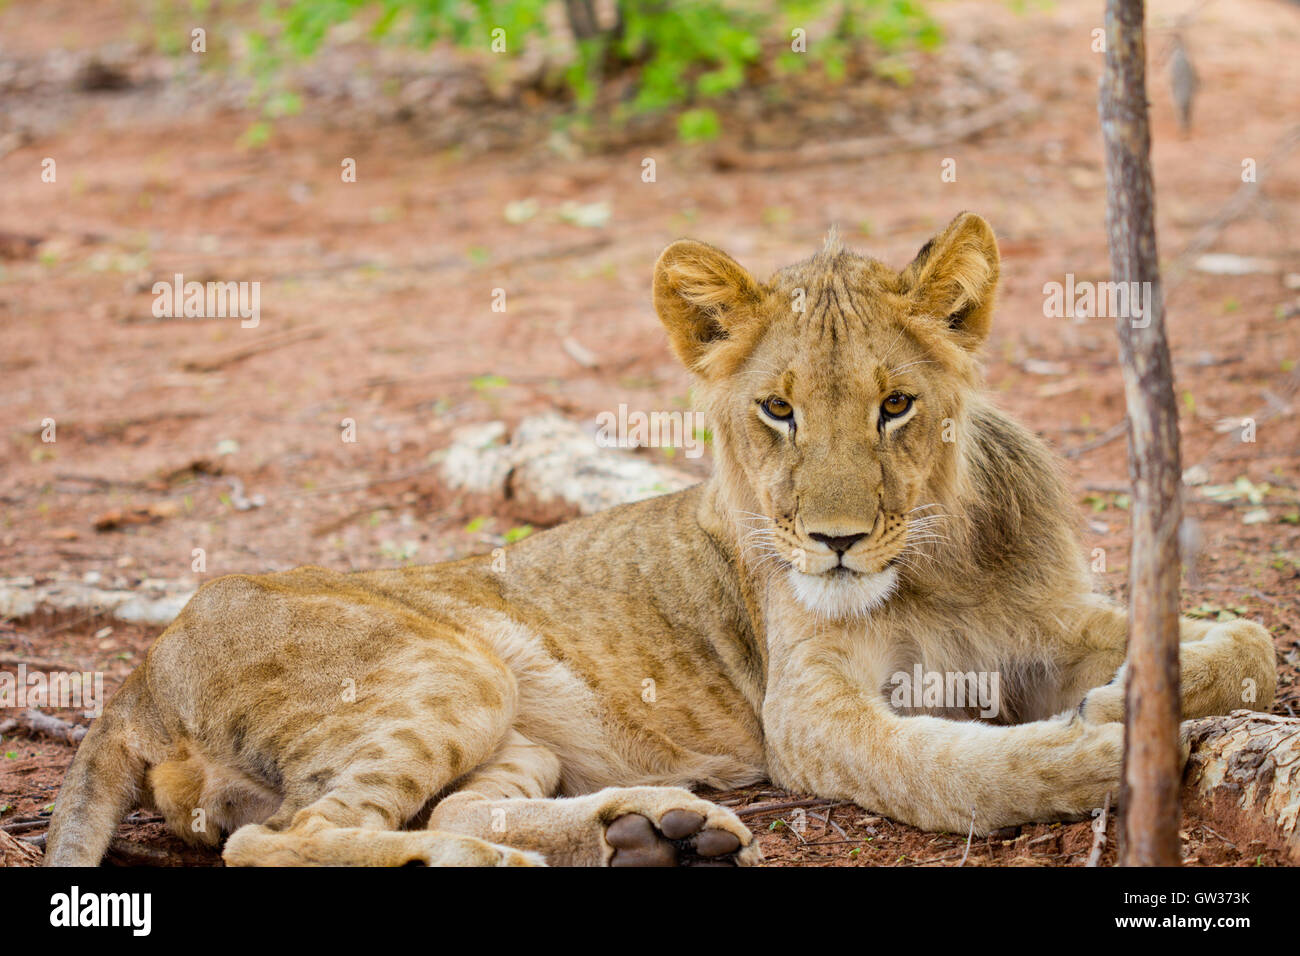 Lion in African Safari Stock Photo